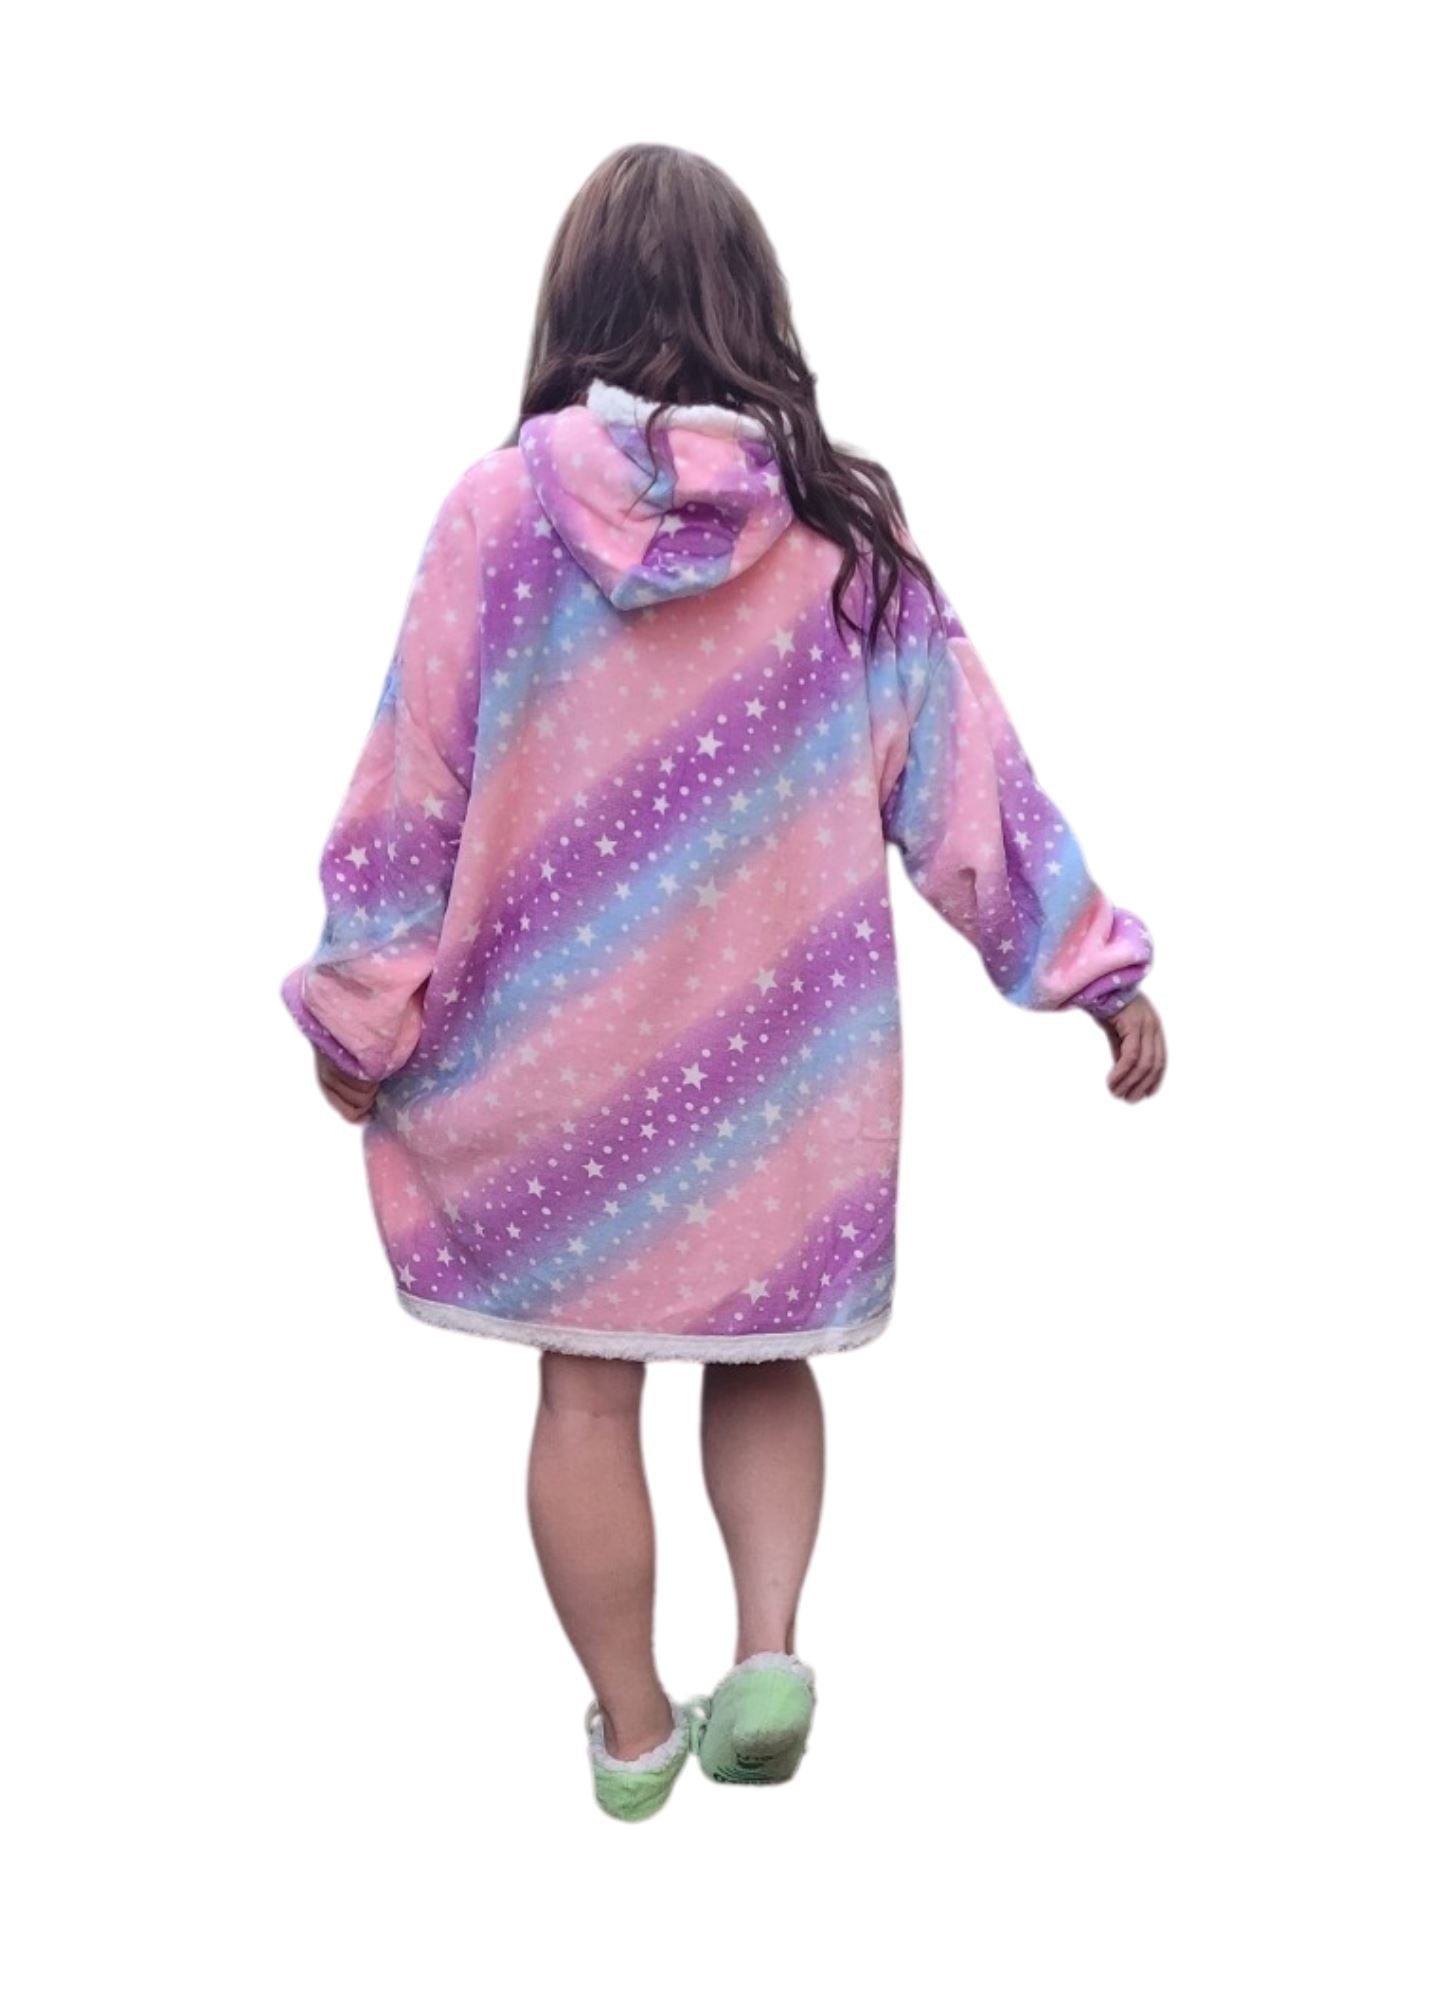 Oversized Blanket SNOODI OODI Jumpers - 5 designs oversized hoody Aambers Goodies xx 